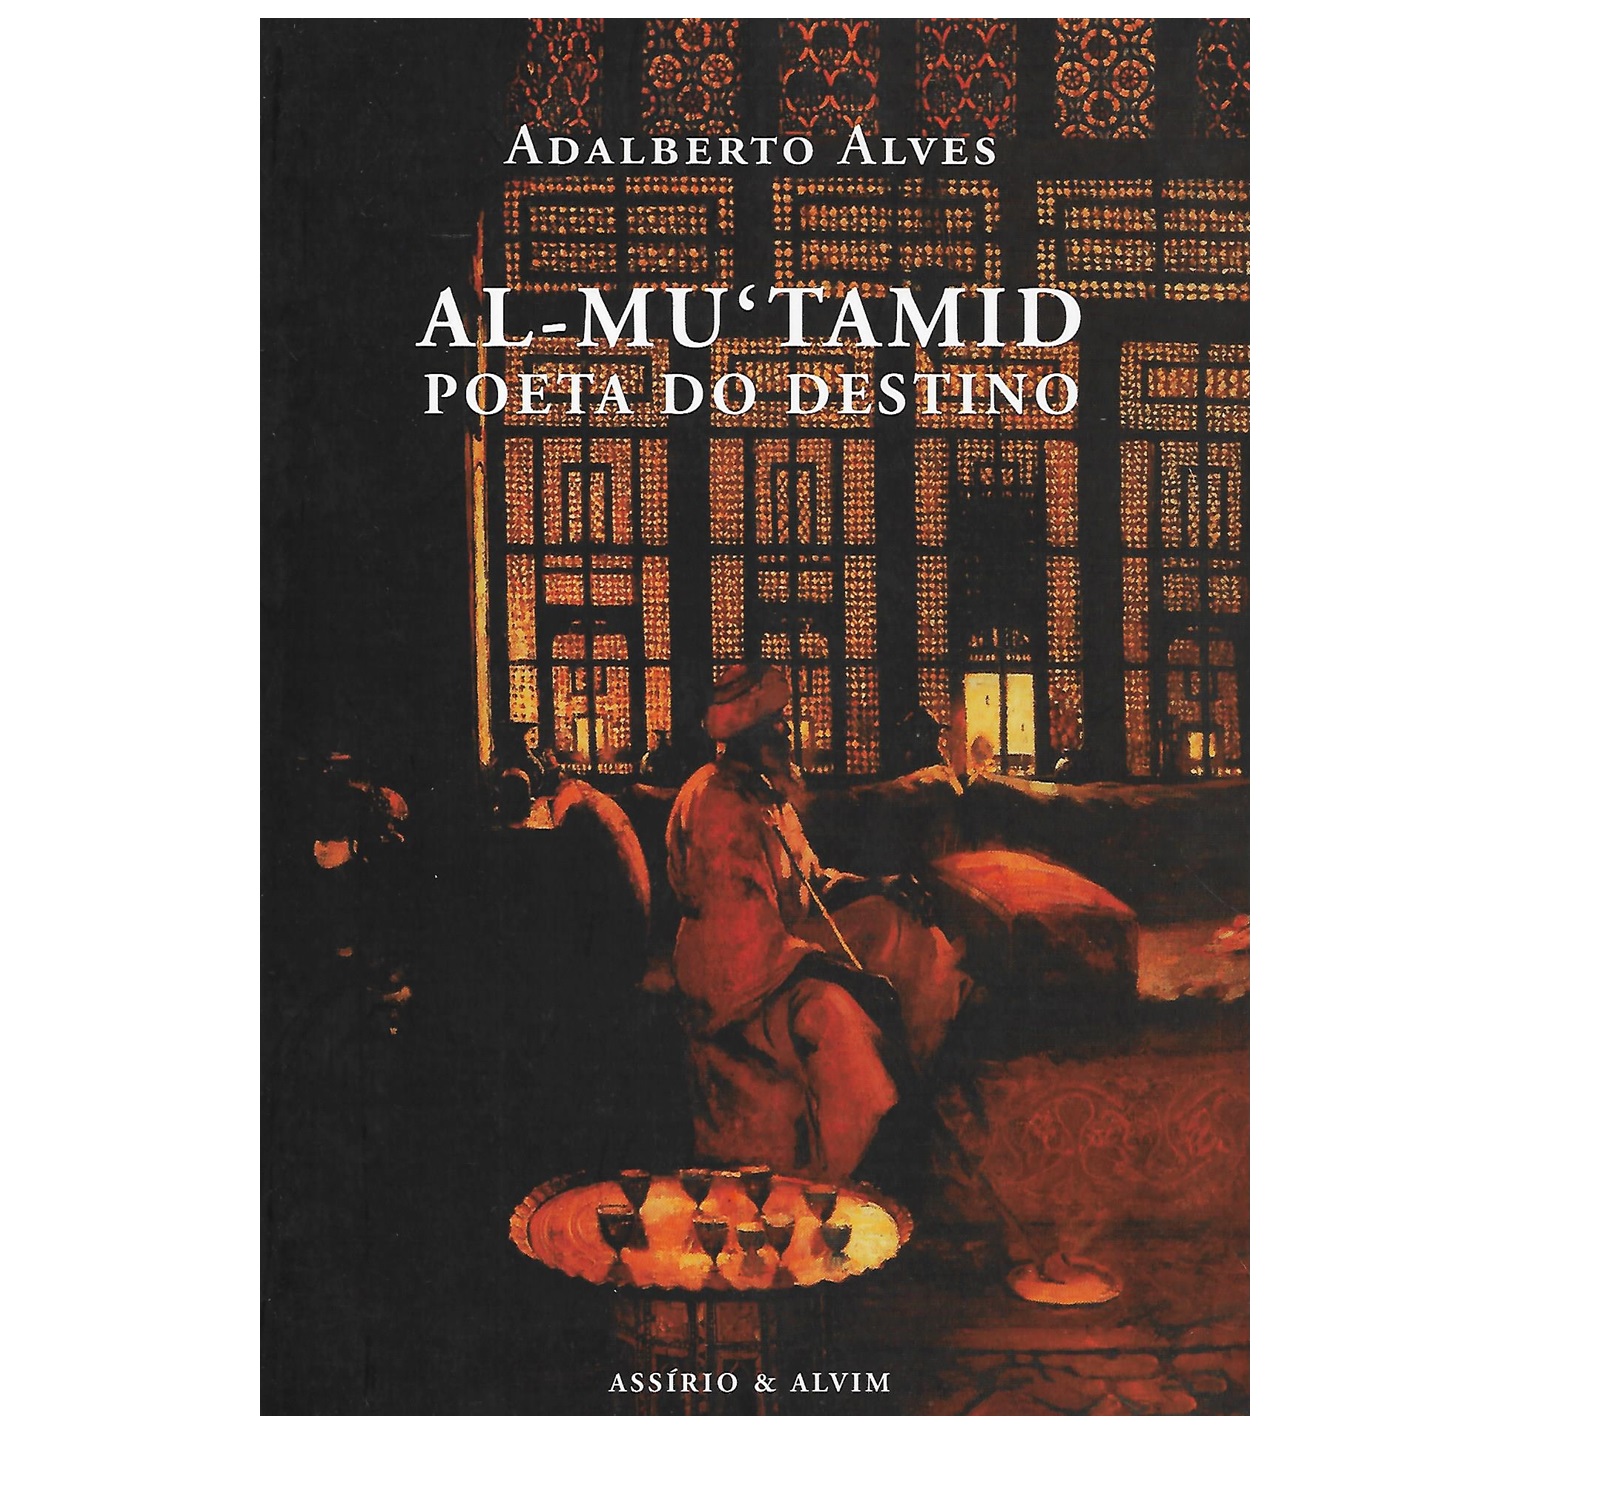 AL-MU'TAMID, POETA DO DESTINO